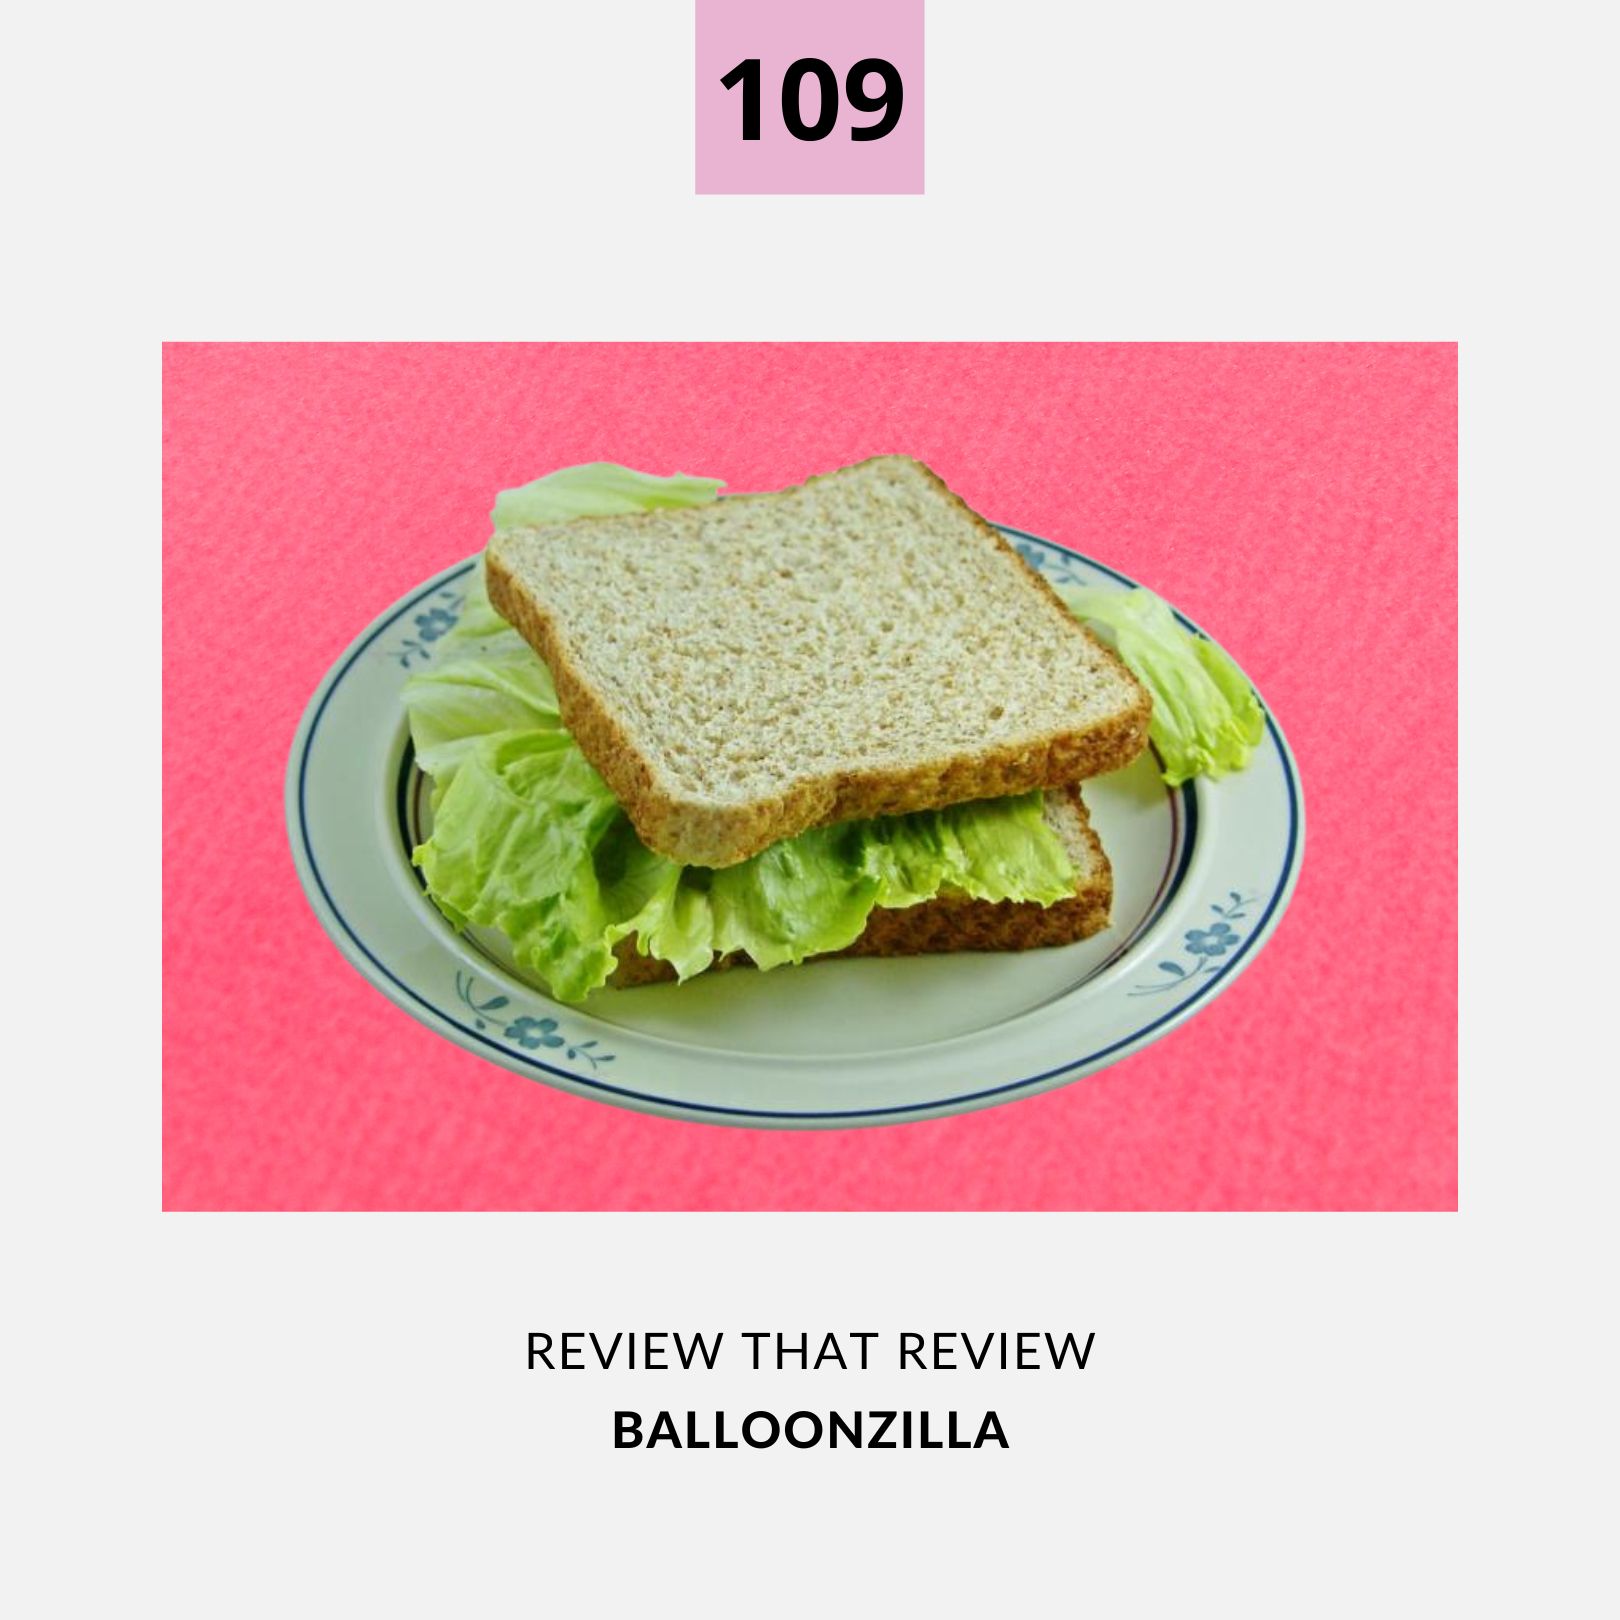 Episode 109: Balloonzilla - 1 Star Review